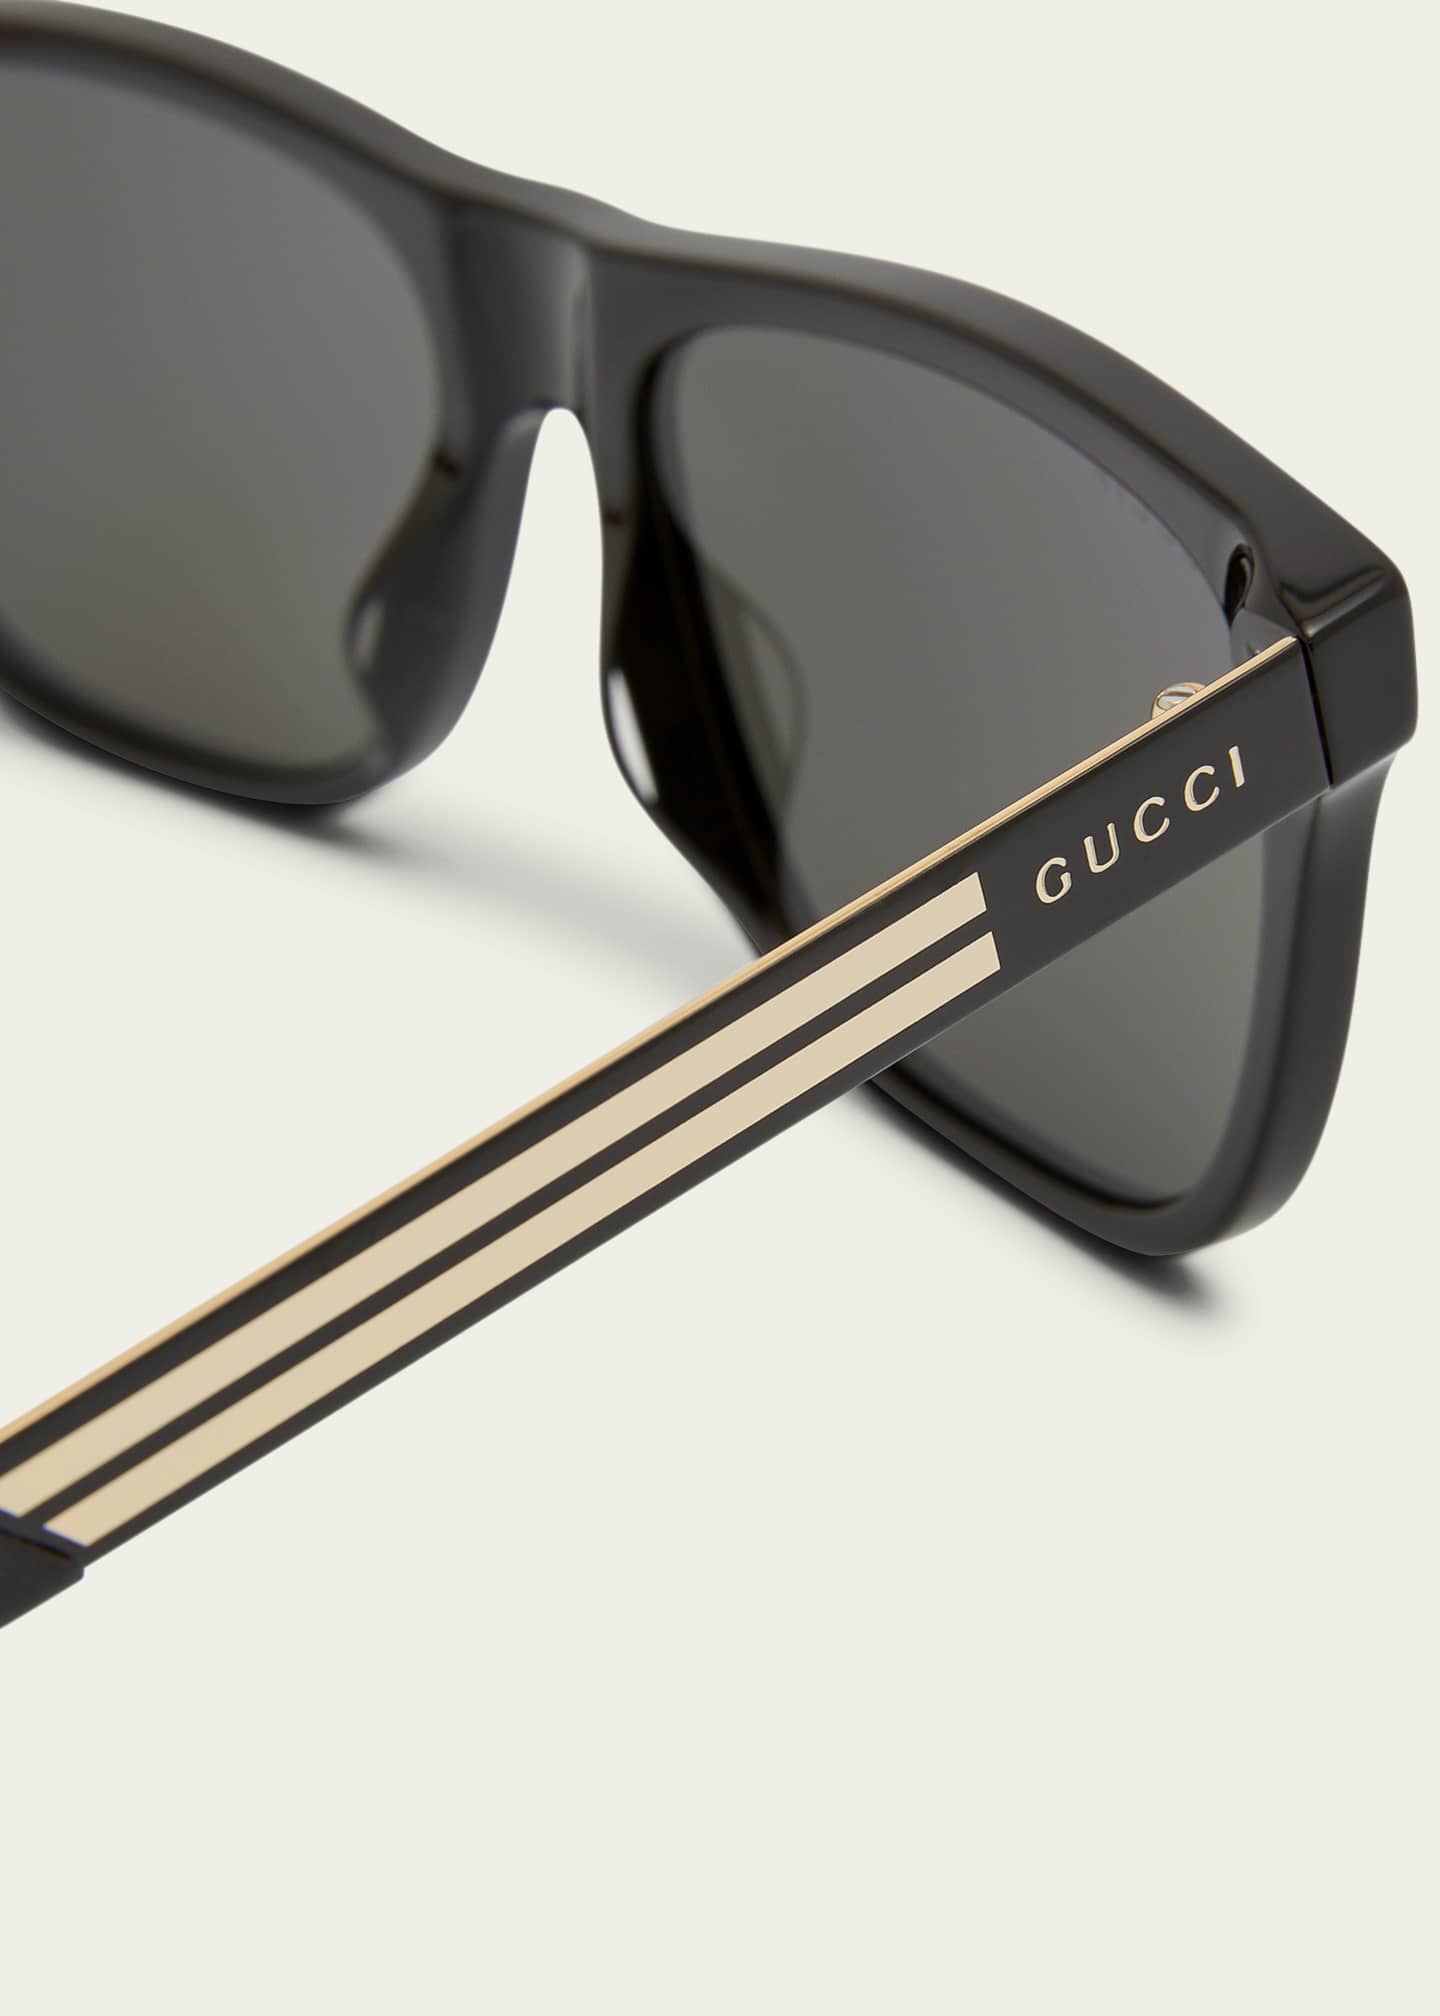 Gucci Men's Square Acetate Logo Sunglasses - Bergdorf Goodman